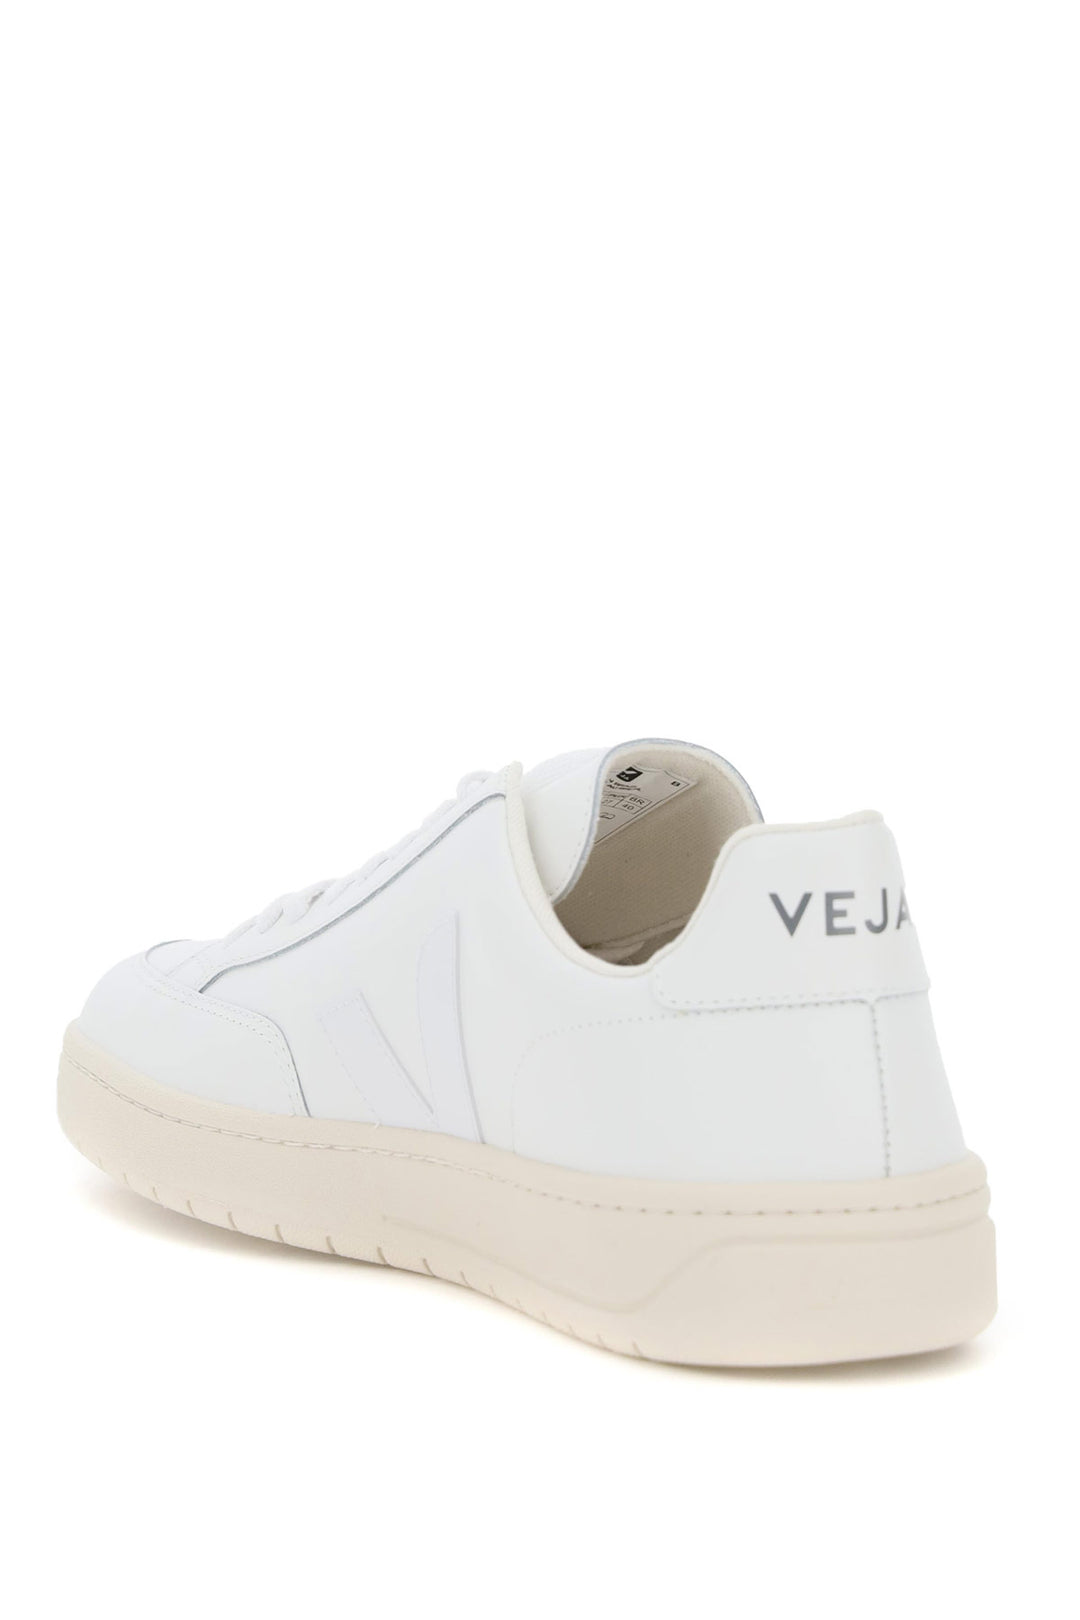 Veja V 12 Leather Sneaker   White